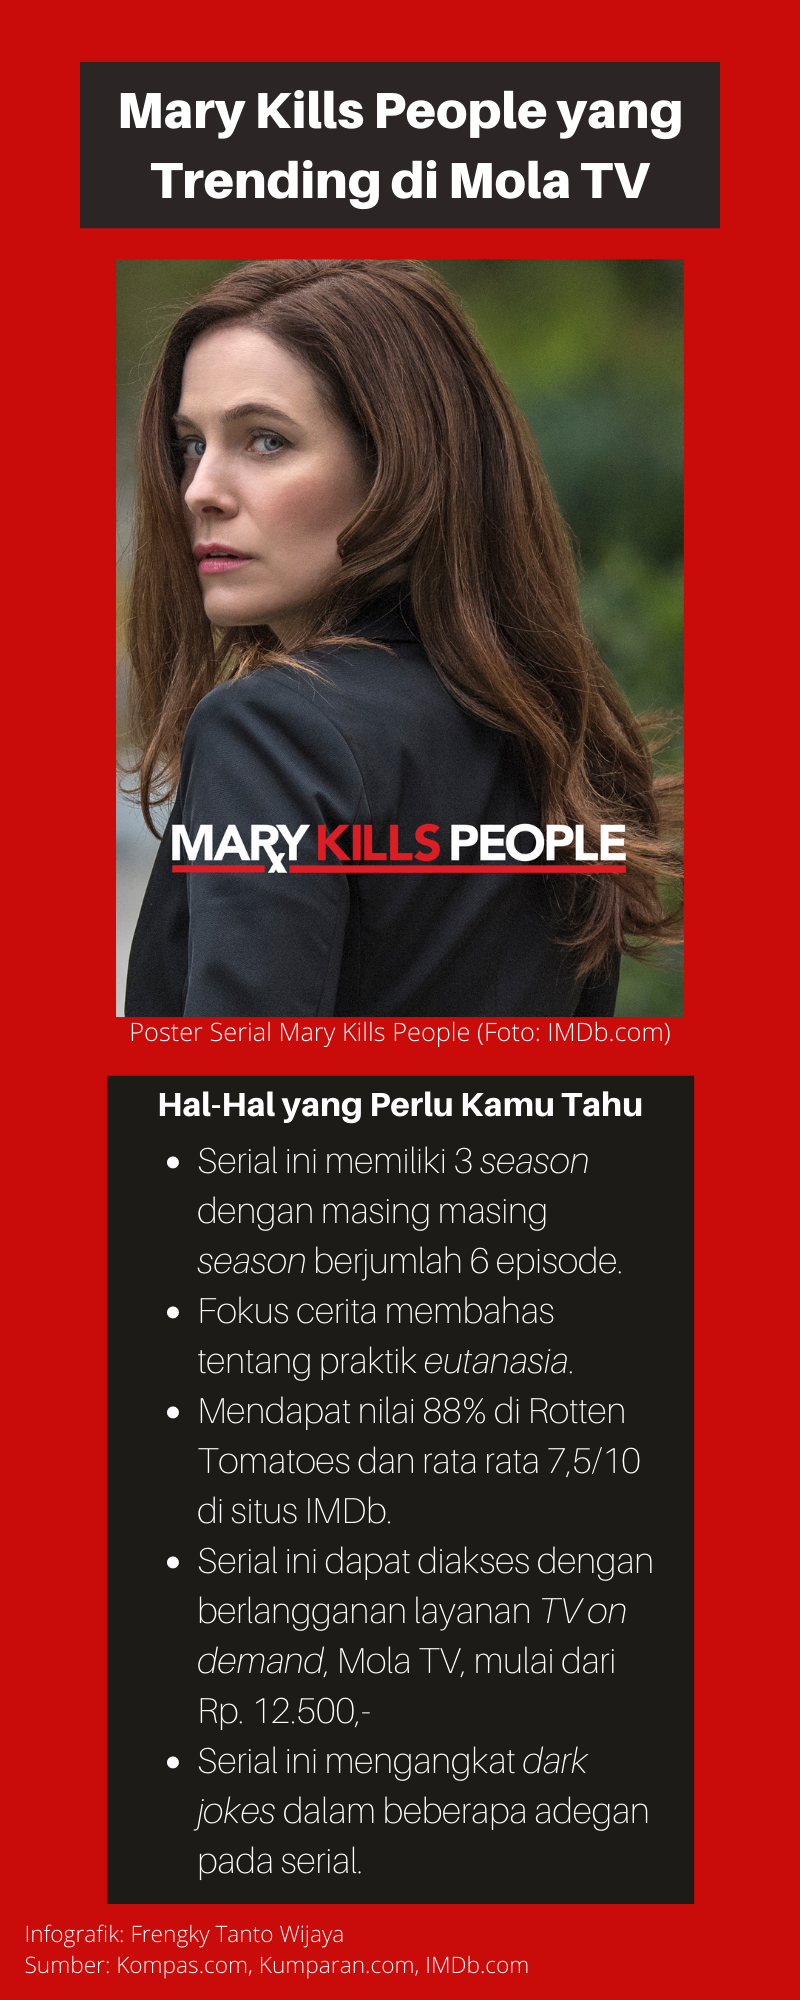 Infografik dari serial TV asal Kanada, Mary Kills People yang sedang trending di Mola TV (ULTIMAGZ.com)